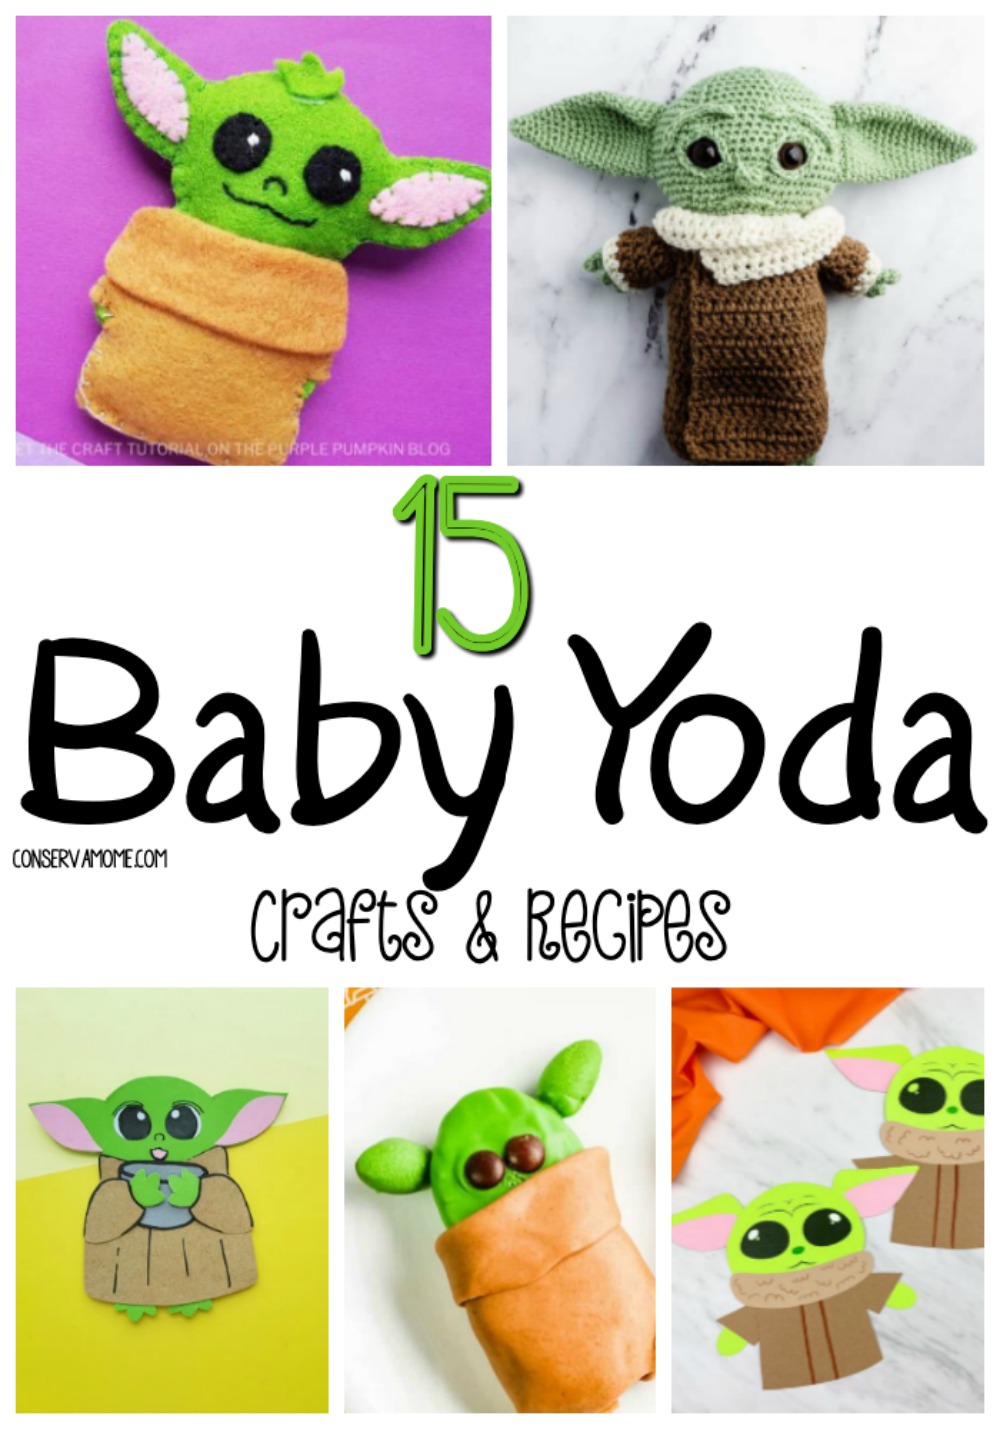 Baby Yoda crafts & Recipes